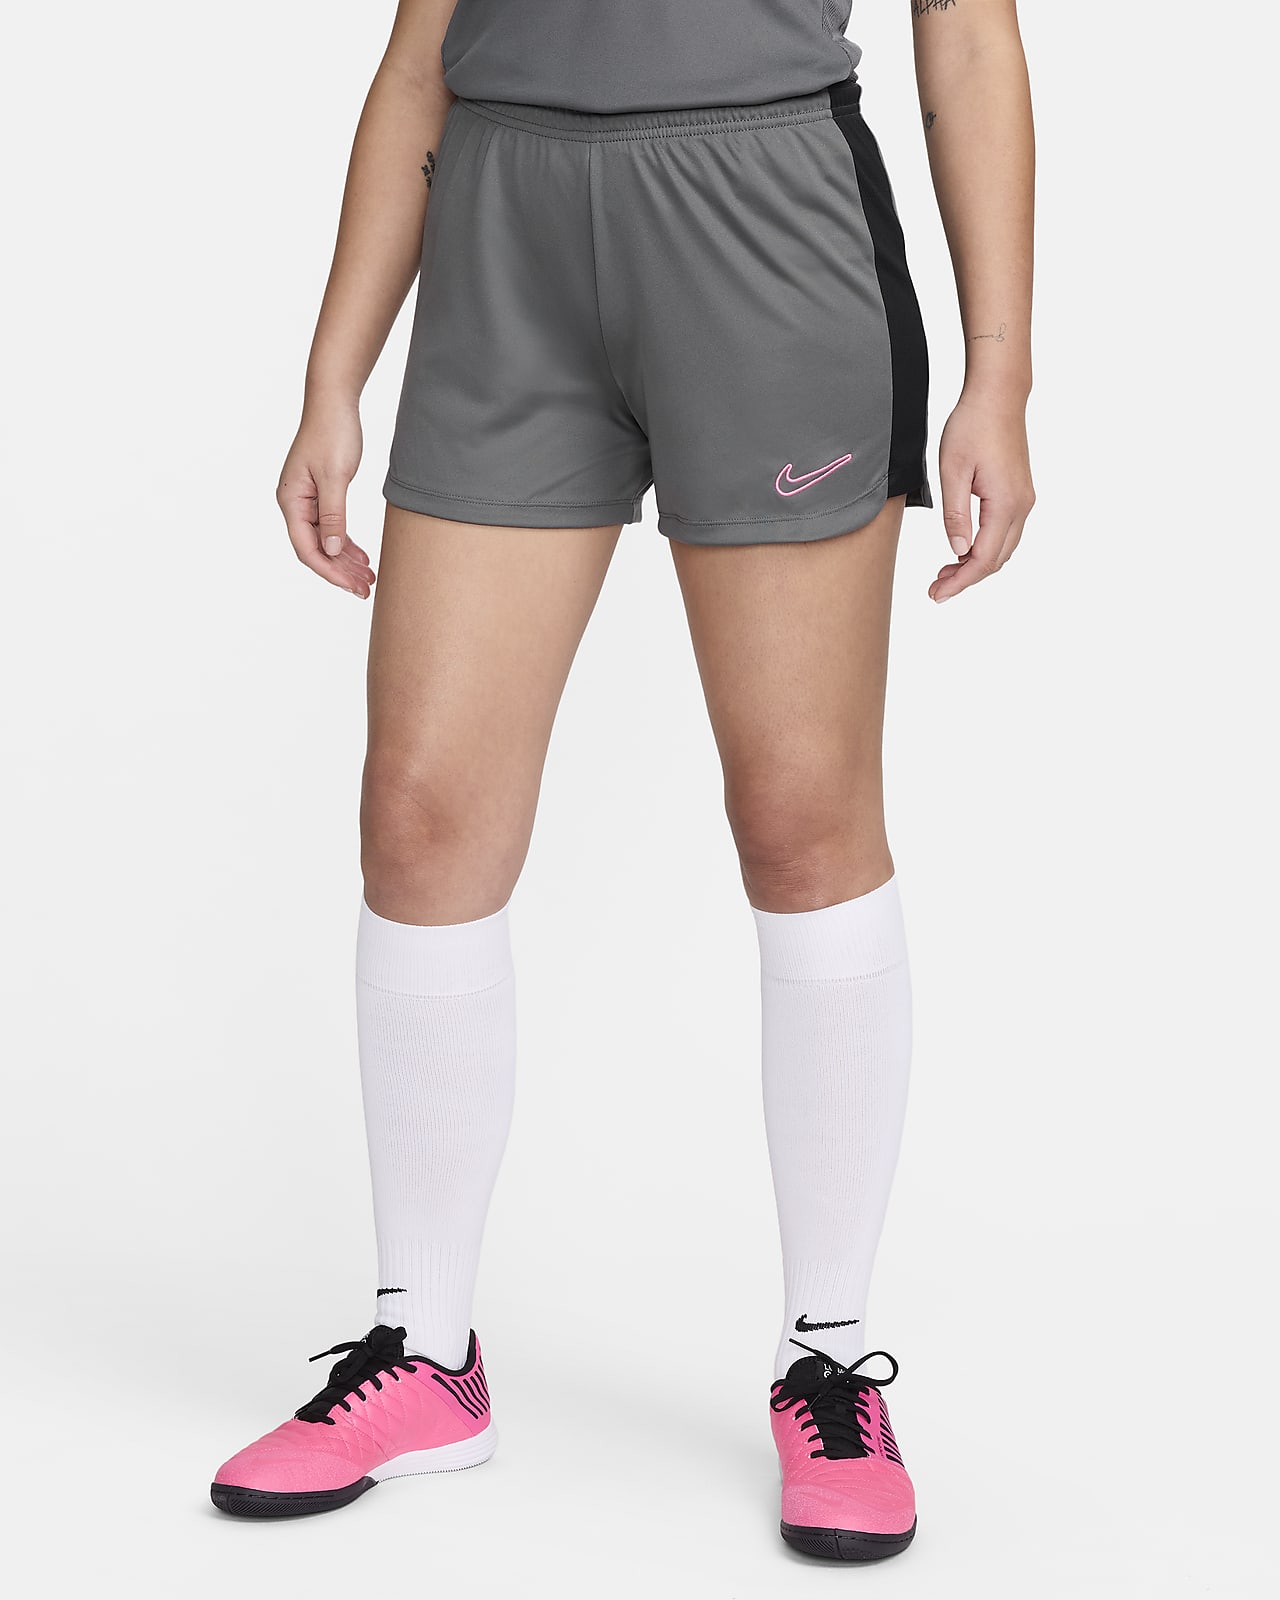 Kit Nike Academy 23 for Female. Tracksuit + Shirt